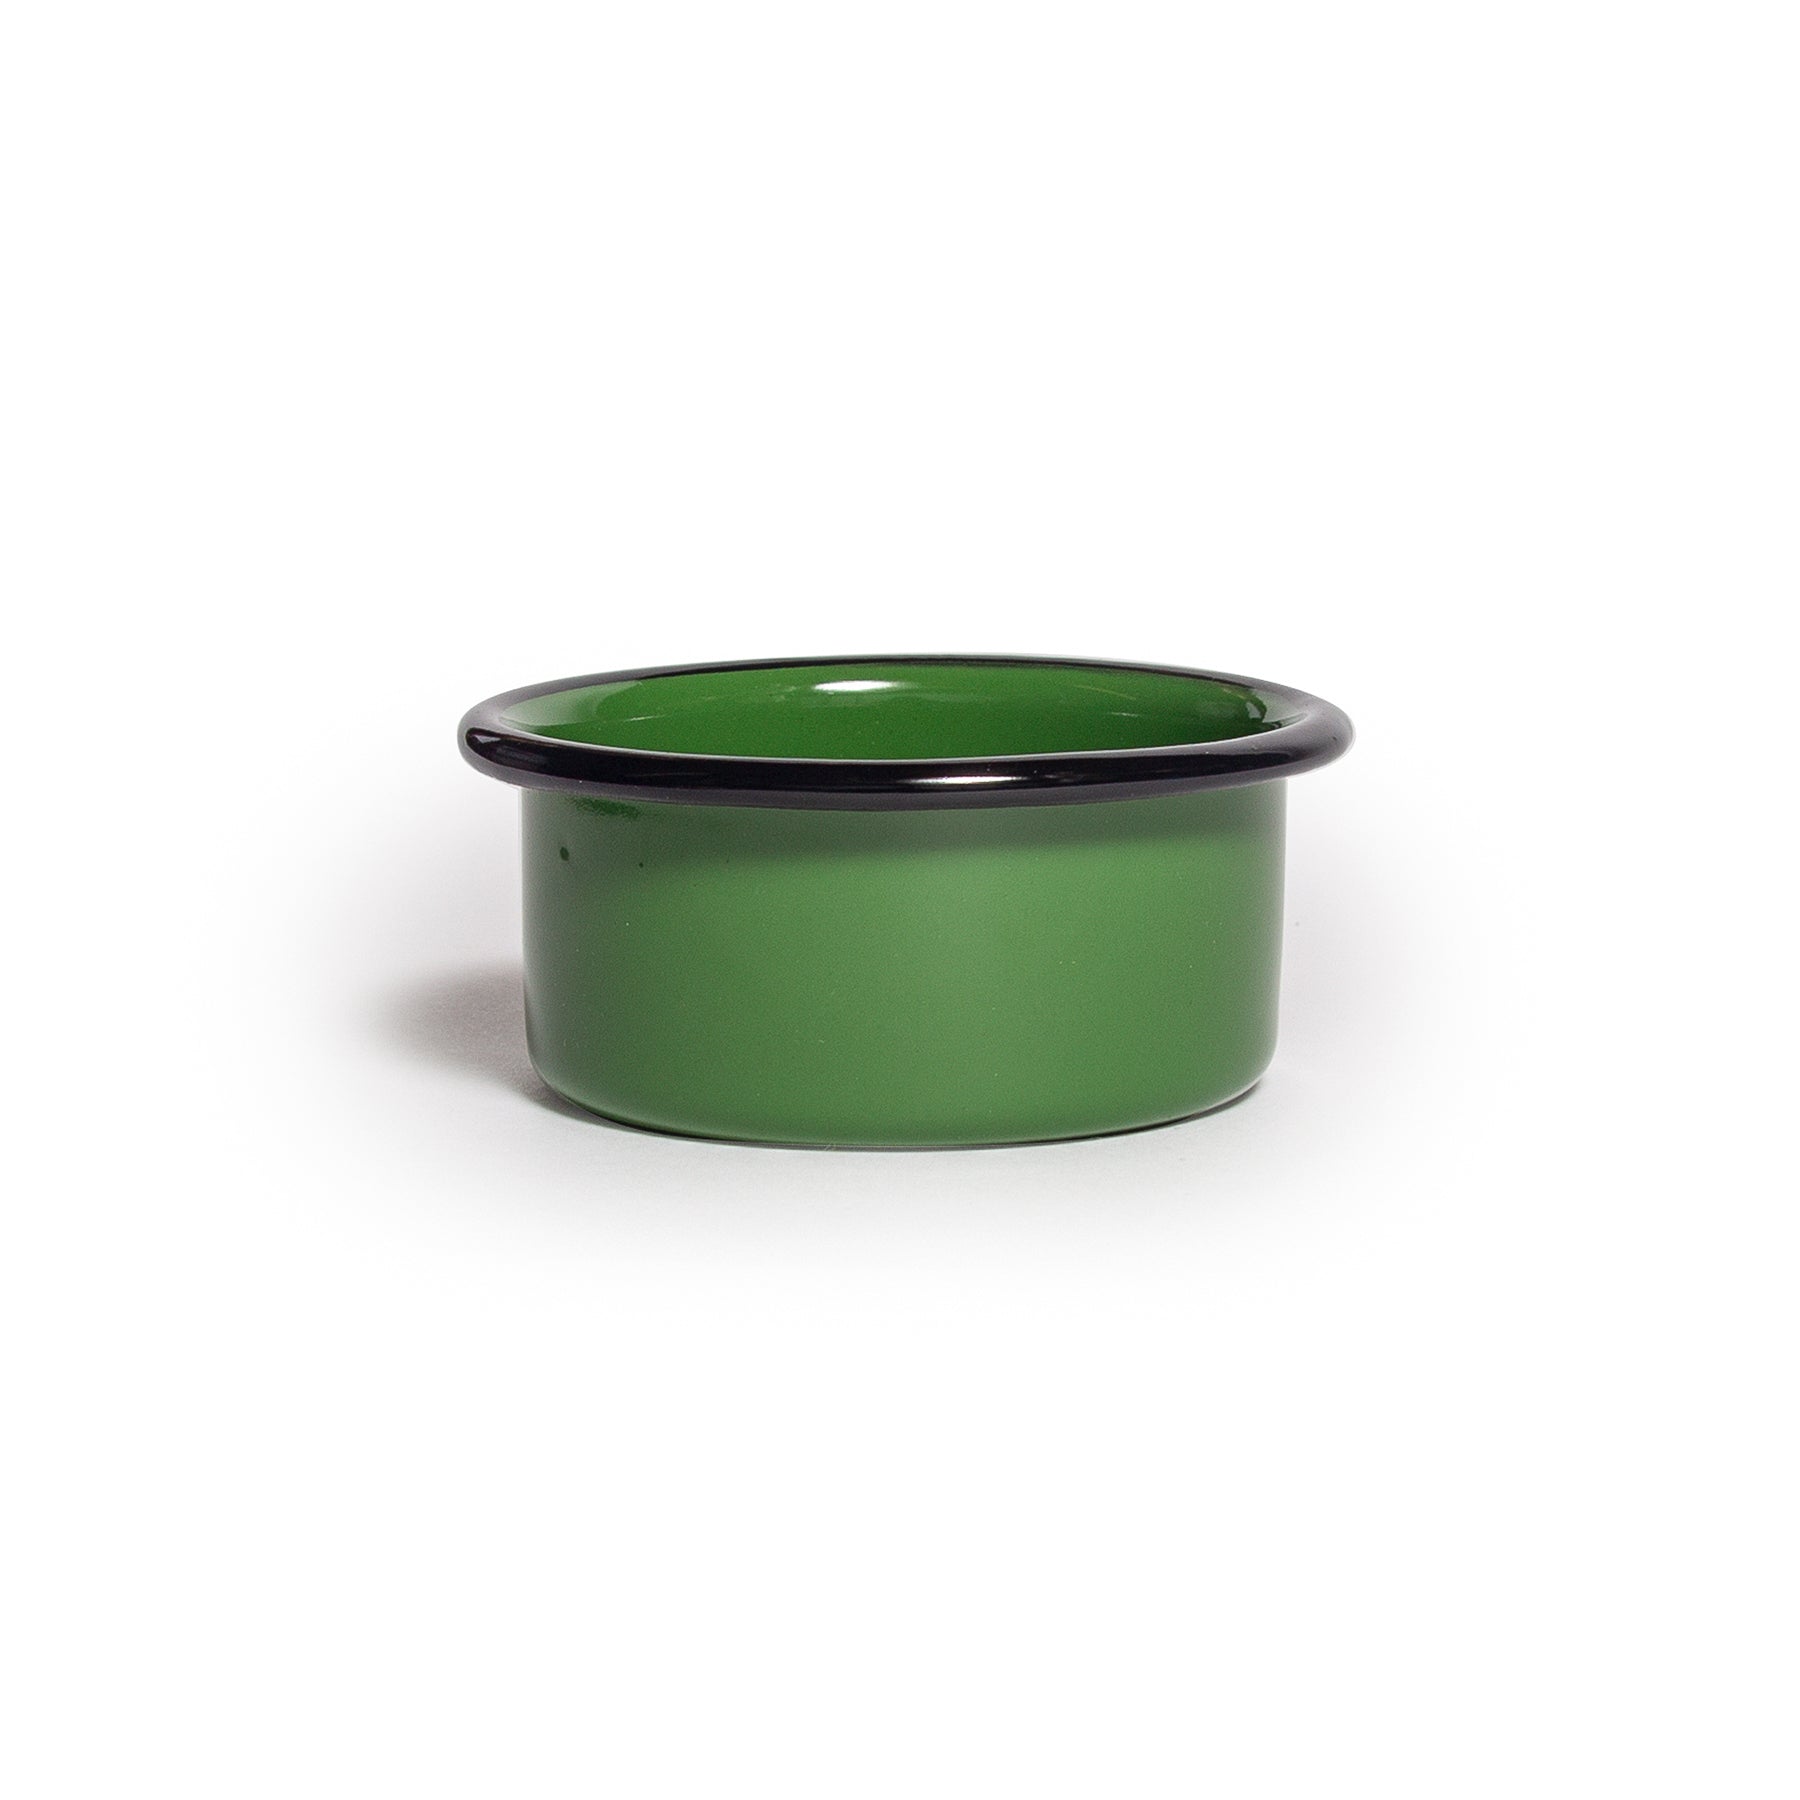 Green and Black Enamel Sauce Bowl